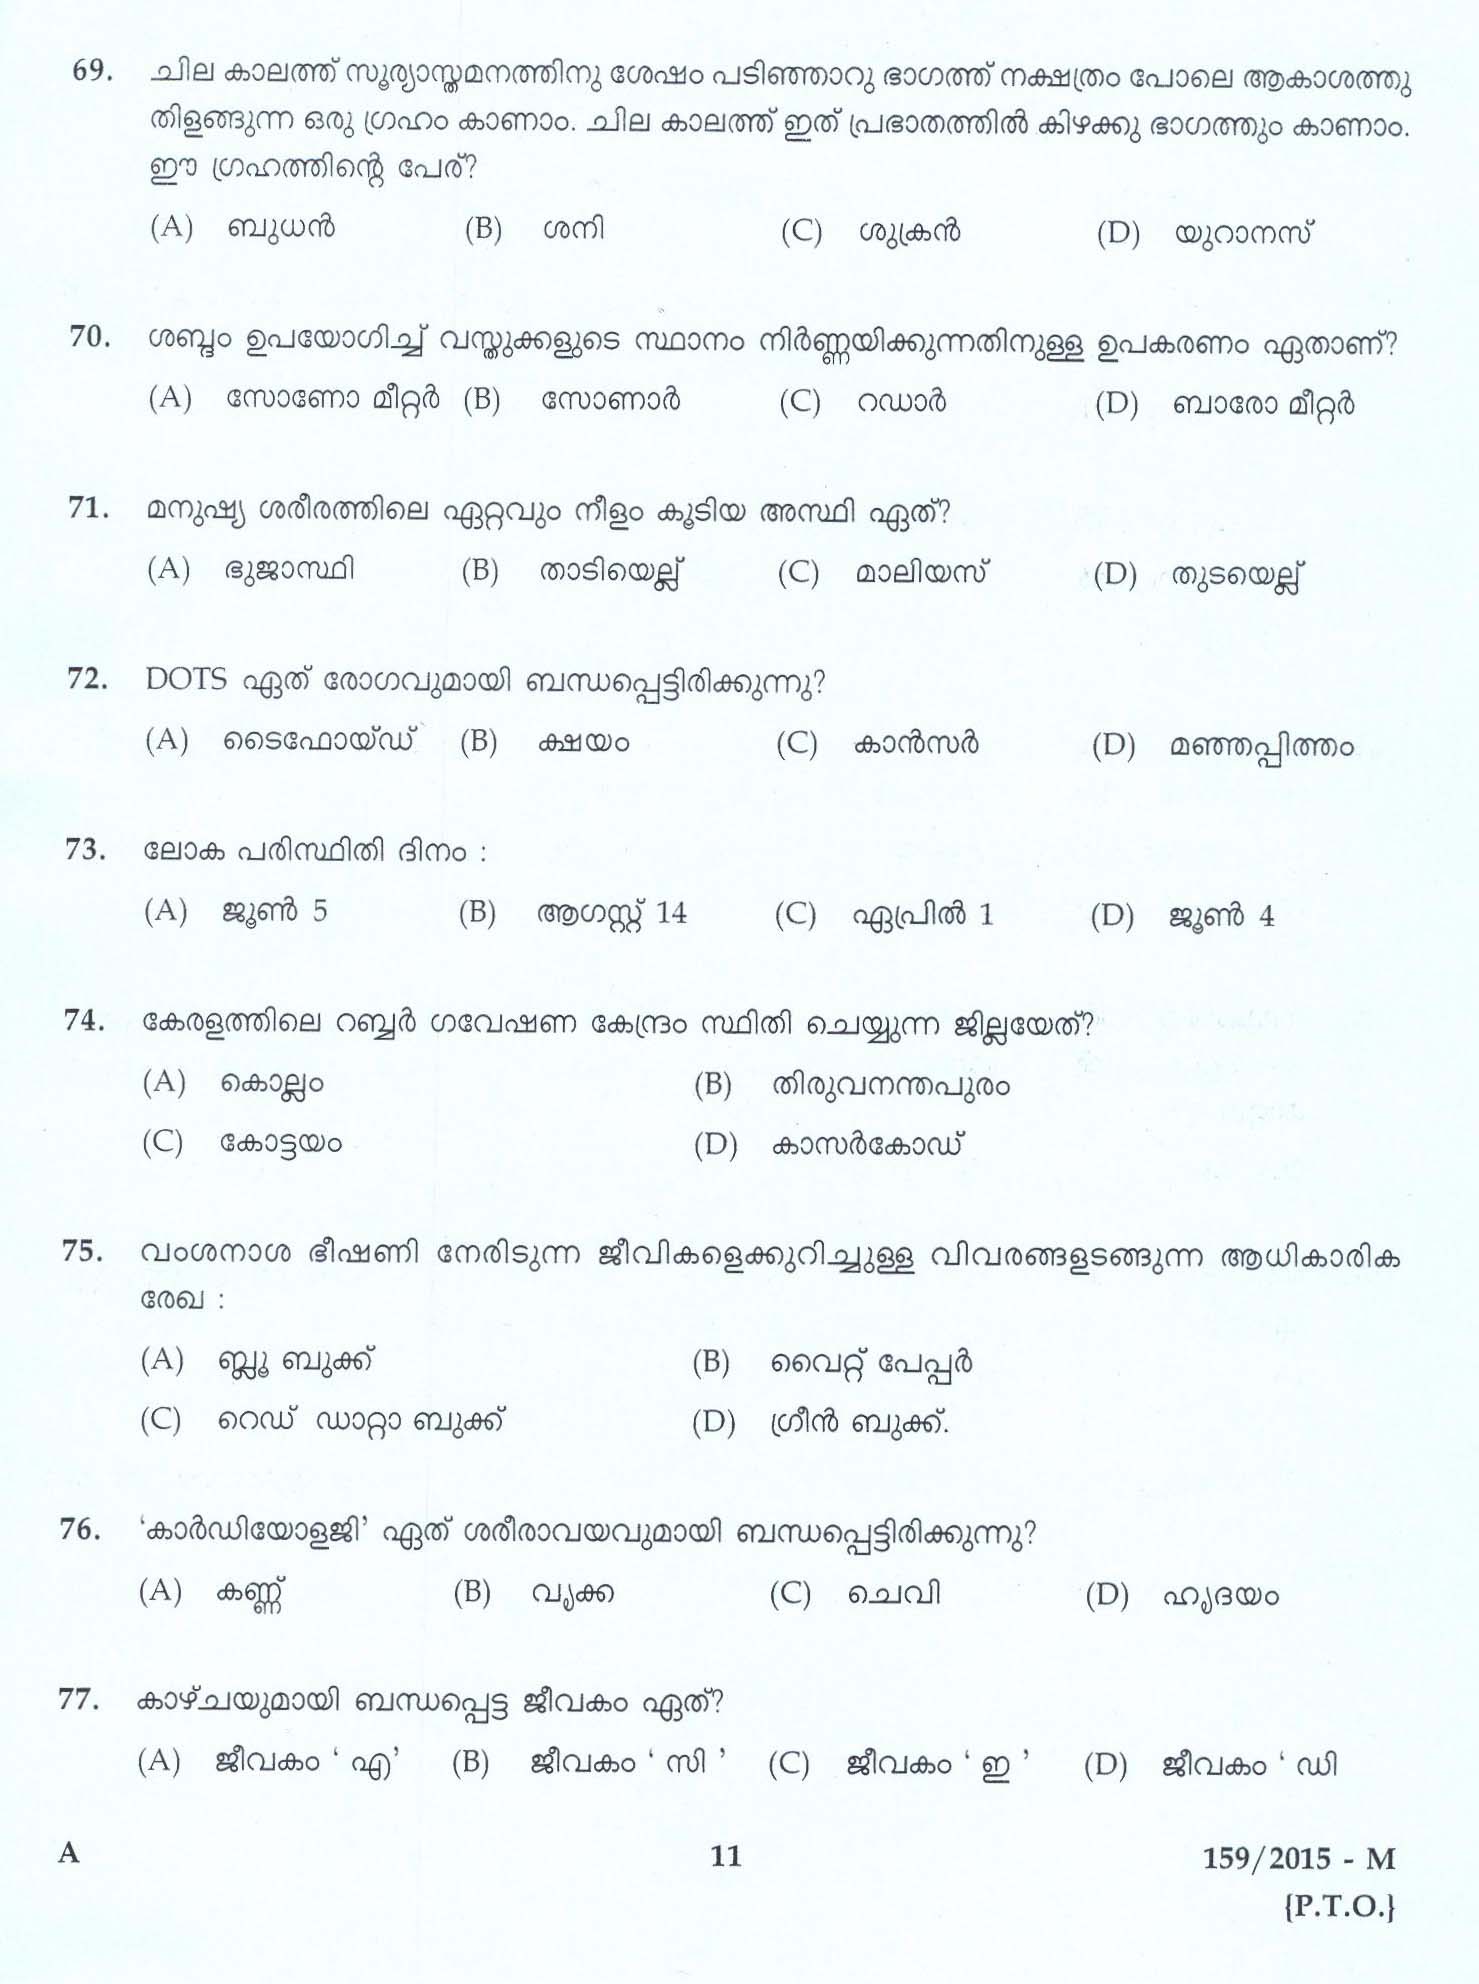 Kerala PSC Security Guard Exam 2015 Question Paper Code 1592015 M 9